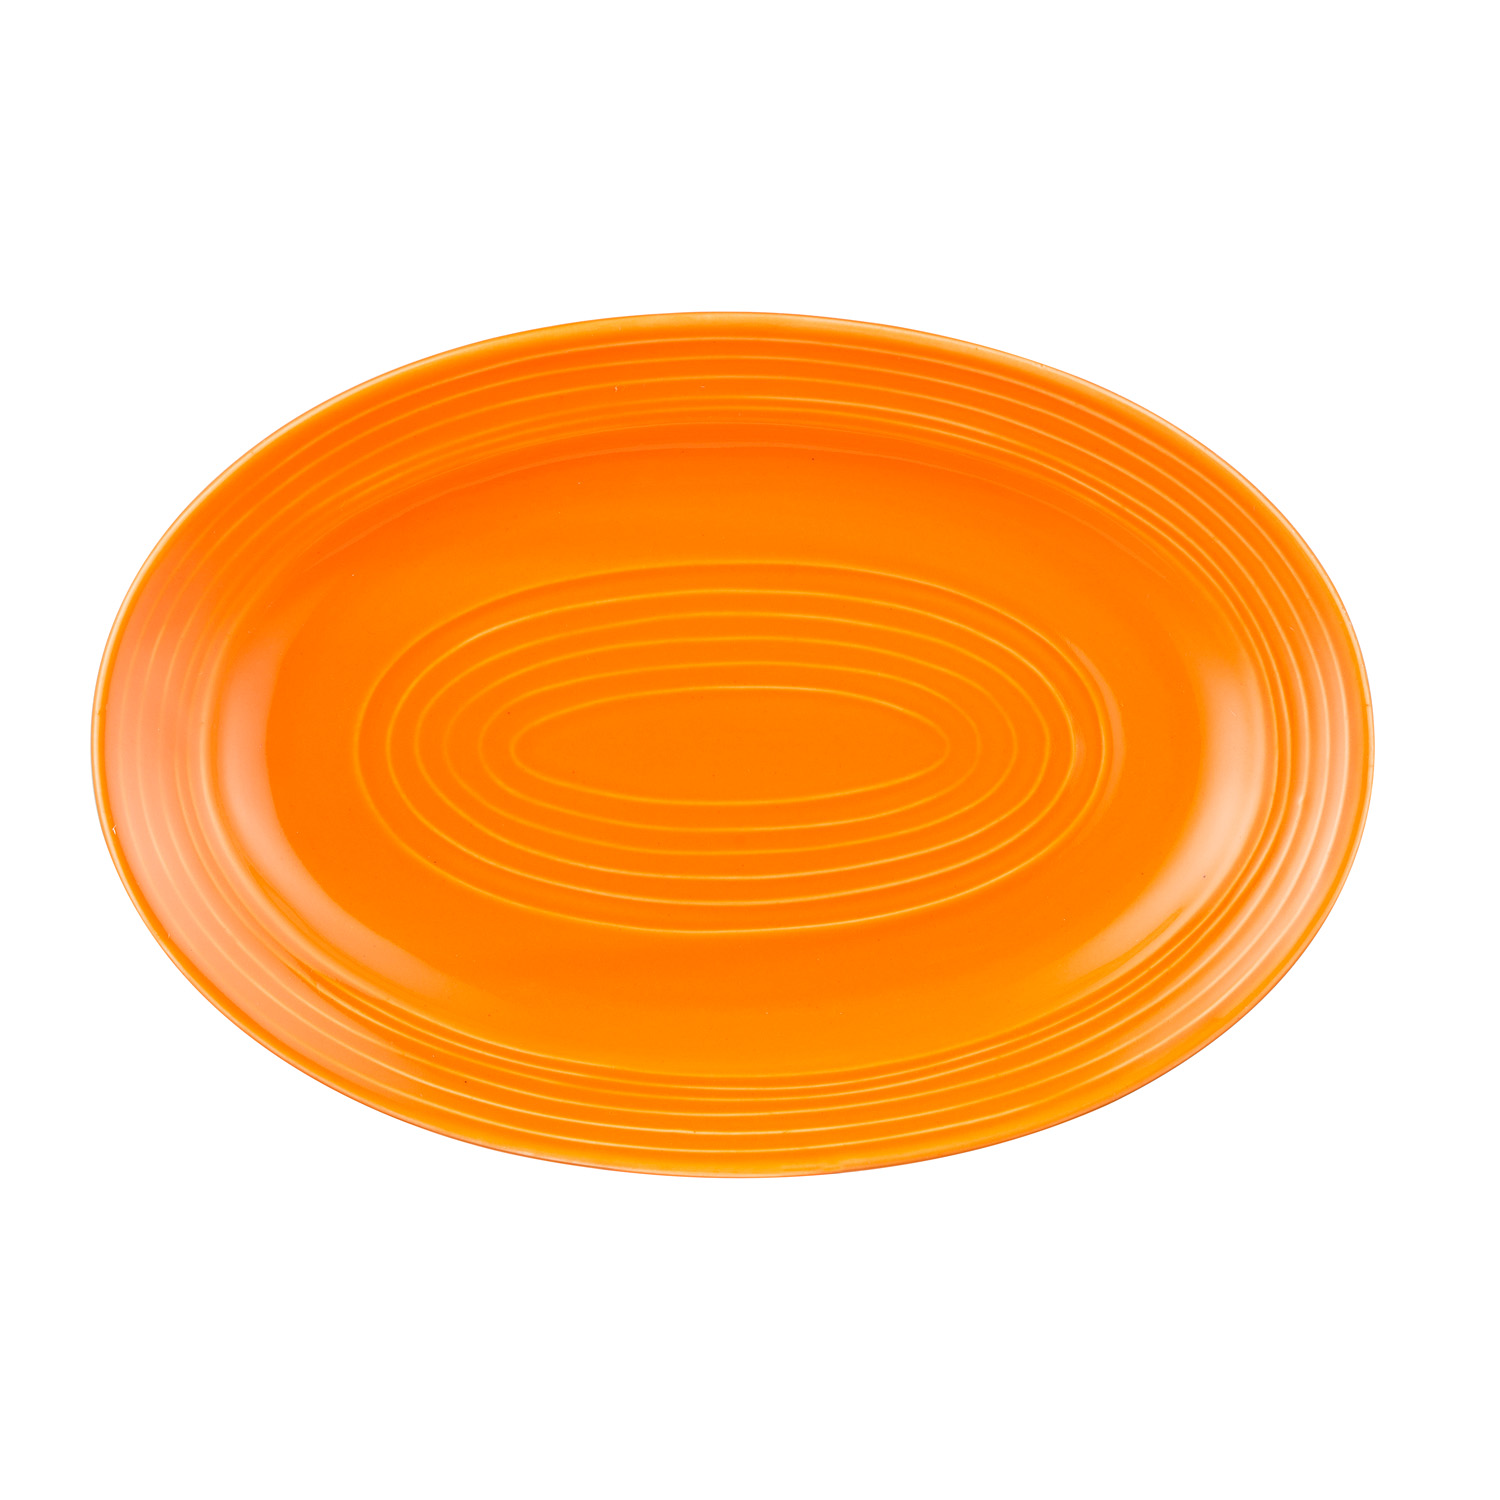 CAC China TG-51-TNG Tango Embossed Porcelain Tangerine Oval Platter 15 3/4" - 1 dozen